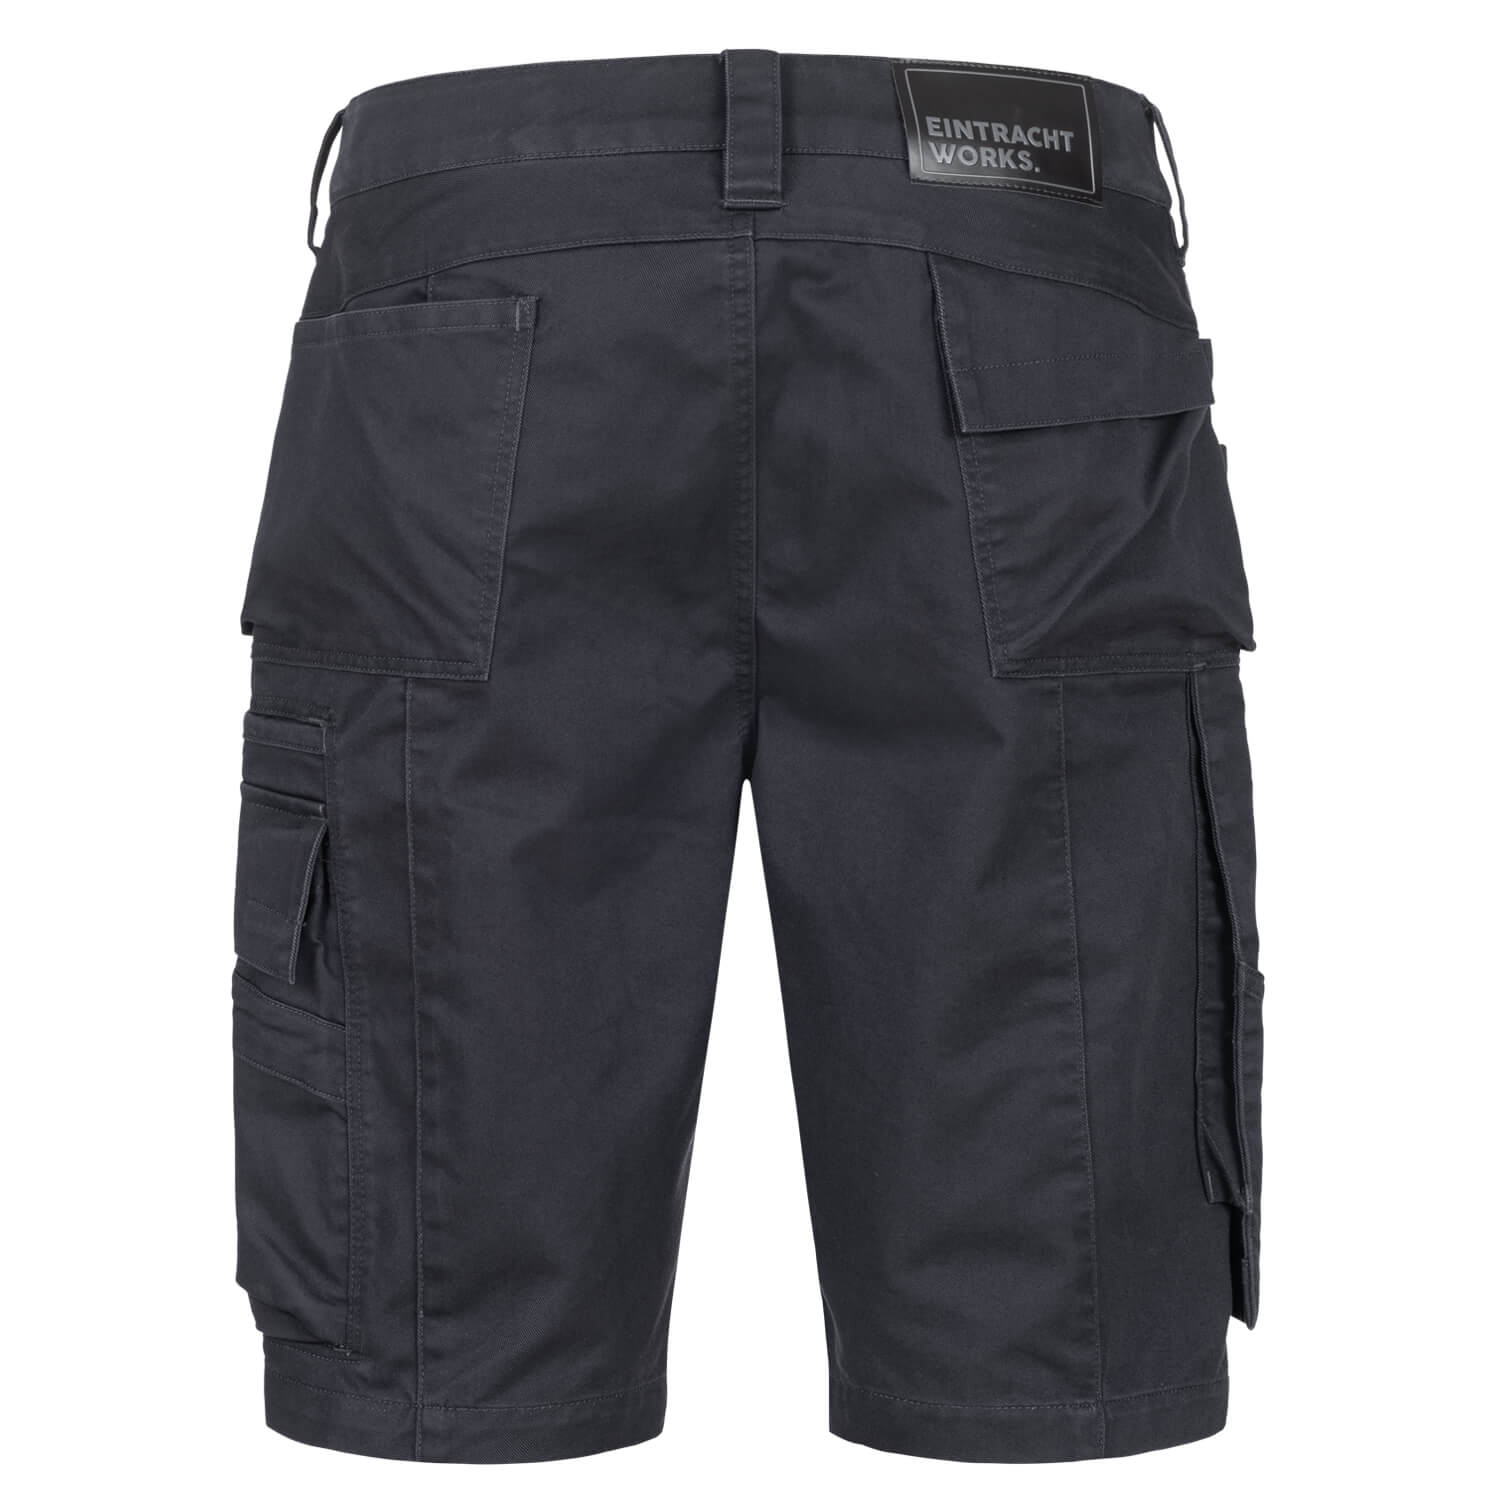 Bild 4: Workwear Pants Short Anthracite